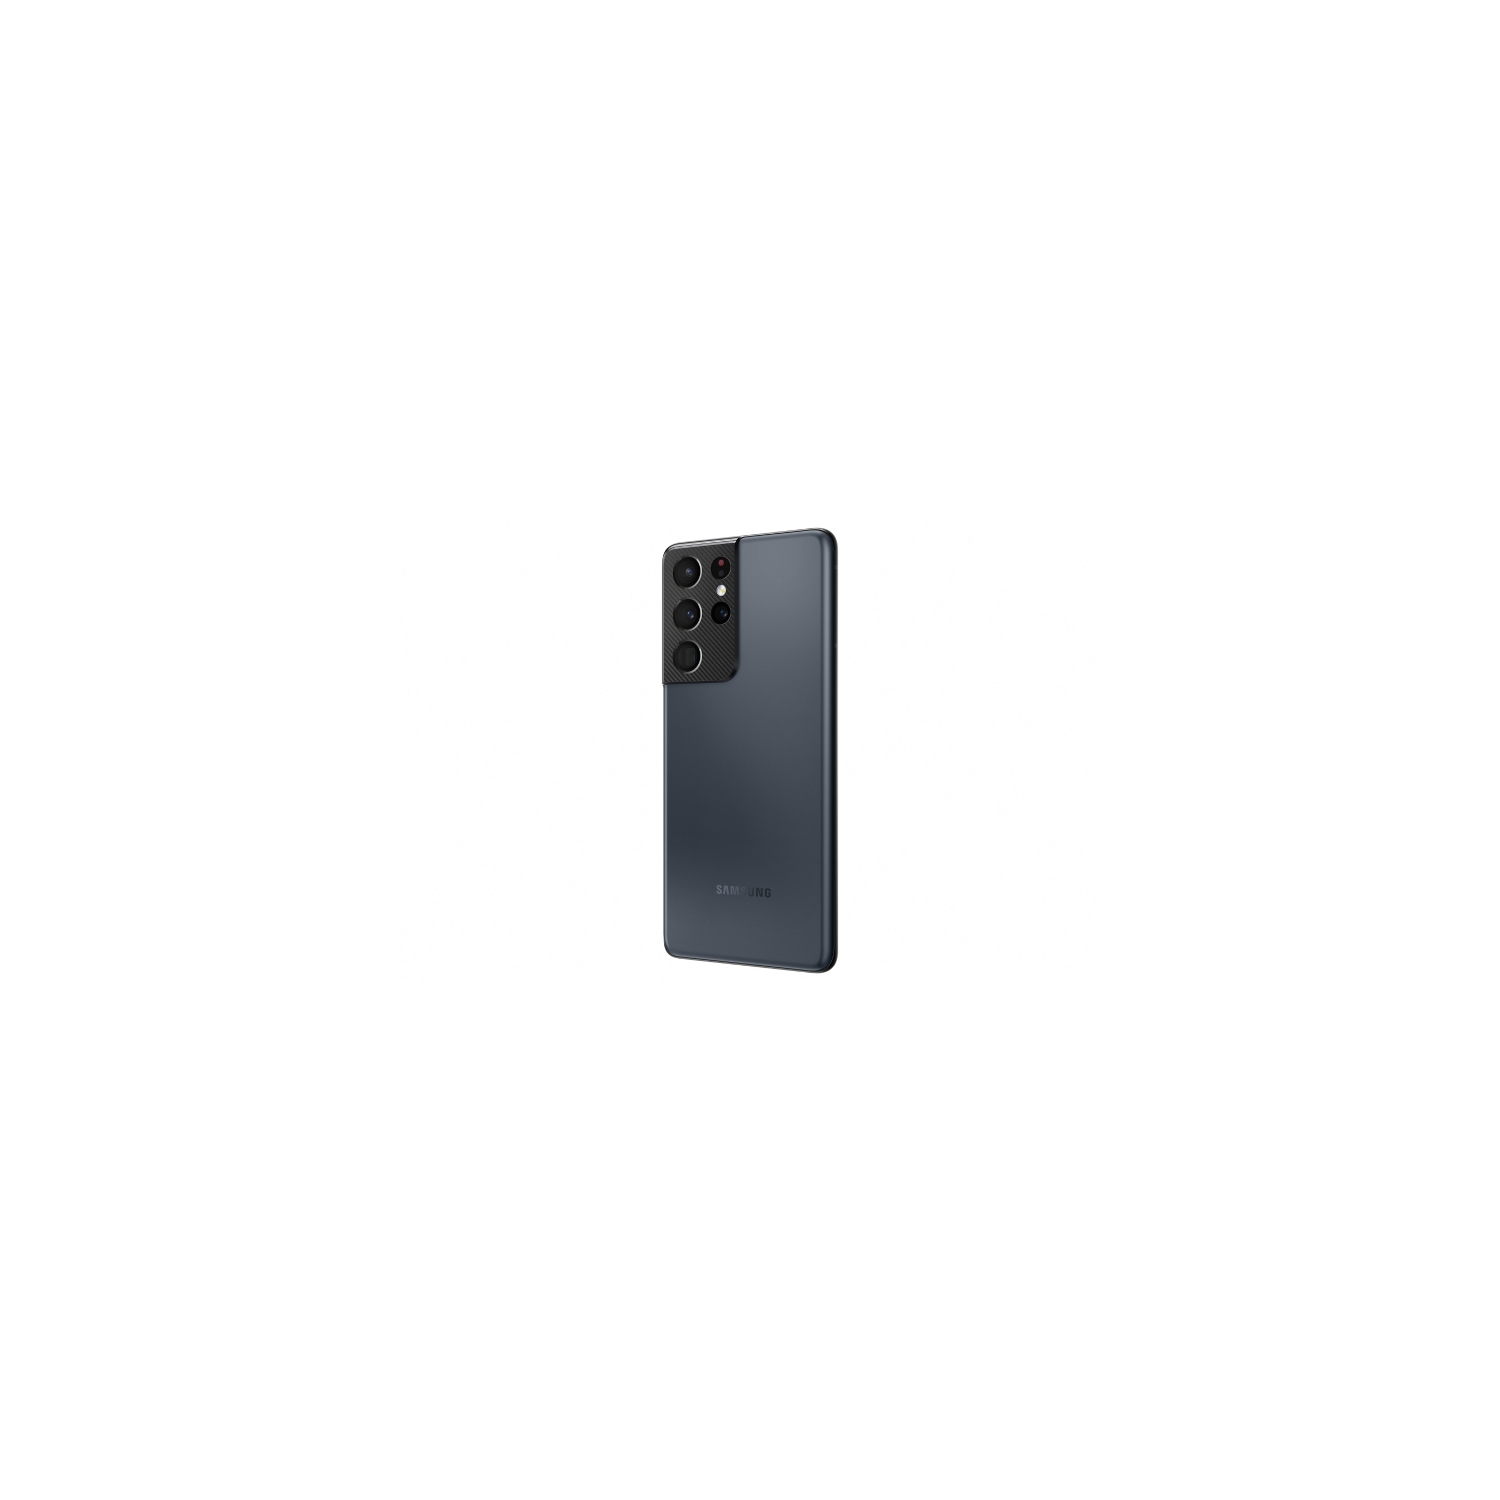 Refurbished (Good) - Samsung Galaxy S21 Ultra 5G 256GB Smartphone - Phantom Navy - Unlocked